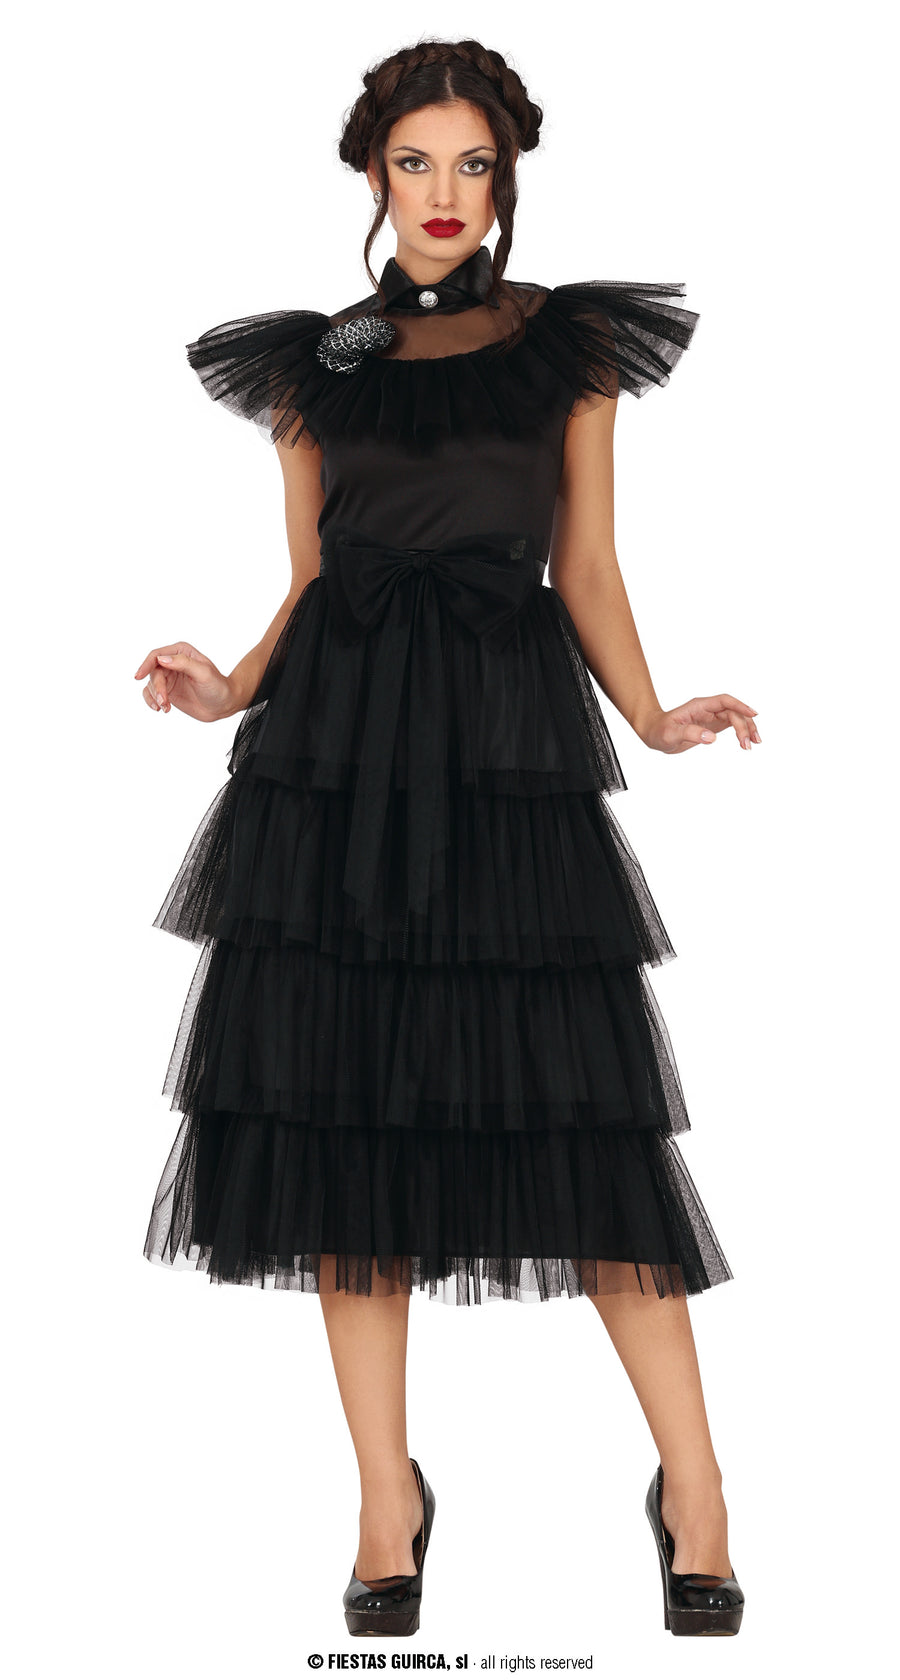 Women's Wednesday Addams Inspired Halloween Character Fancy Dress Costume